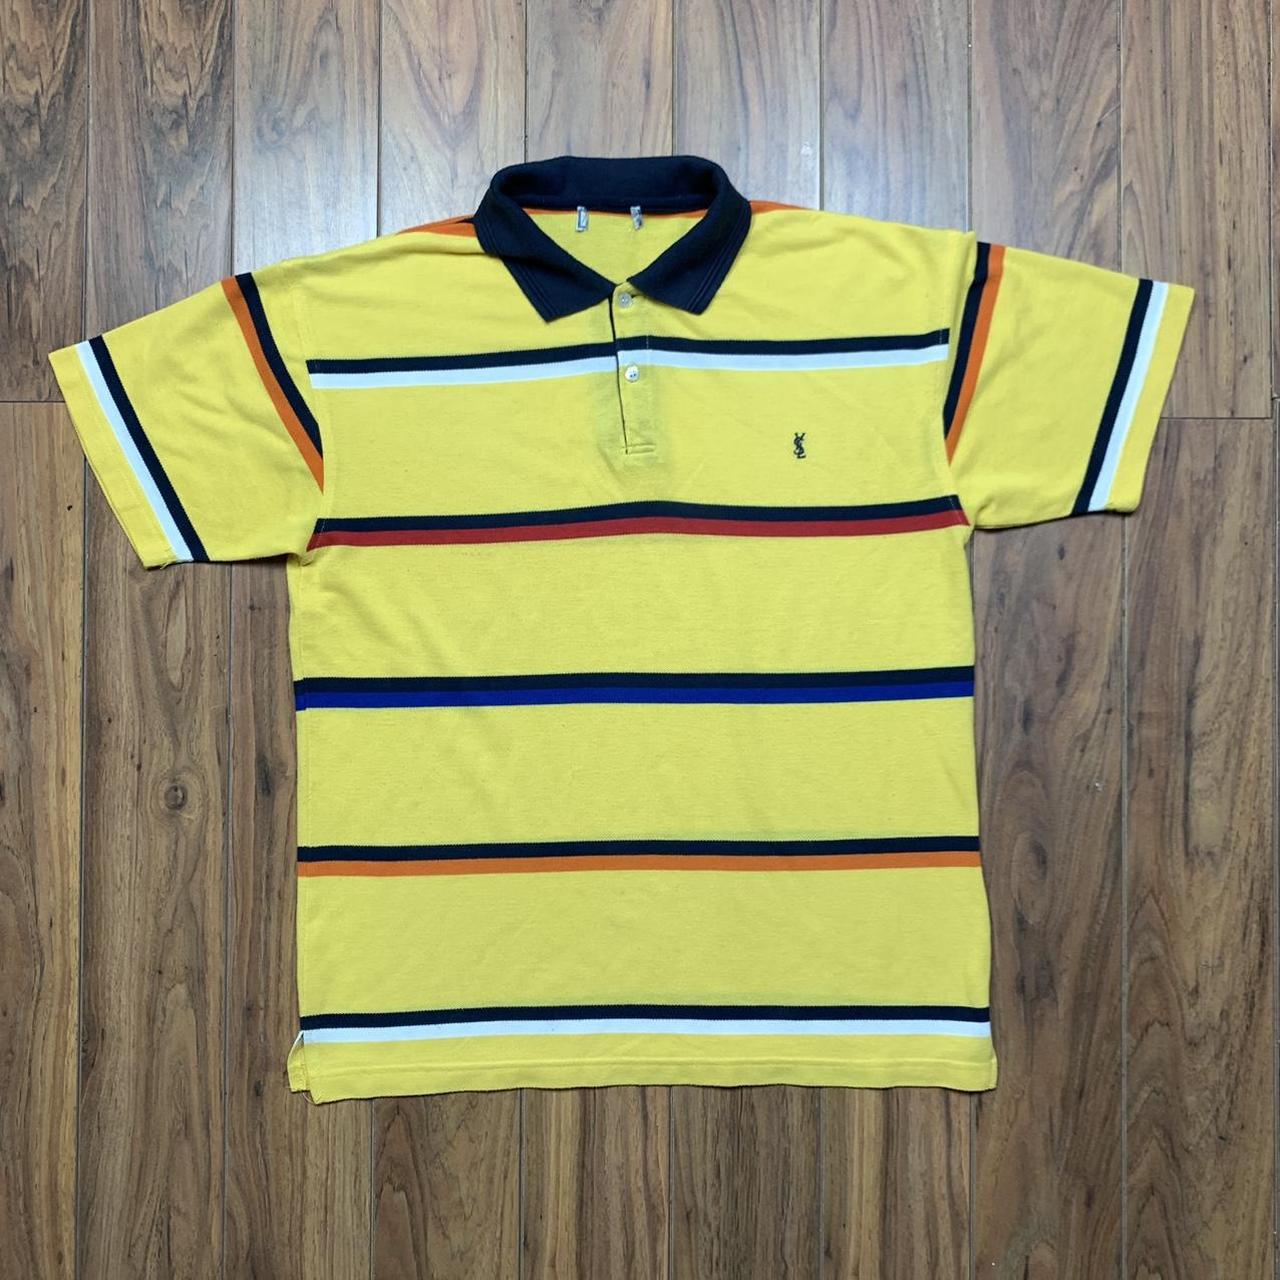 Vintage YSL Polo shirt - Size: Mens Large, fits... - Depop